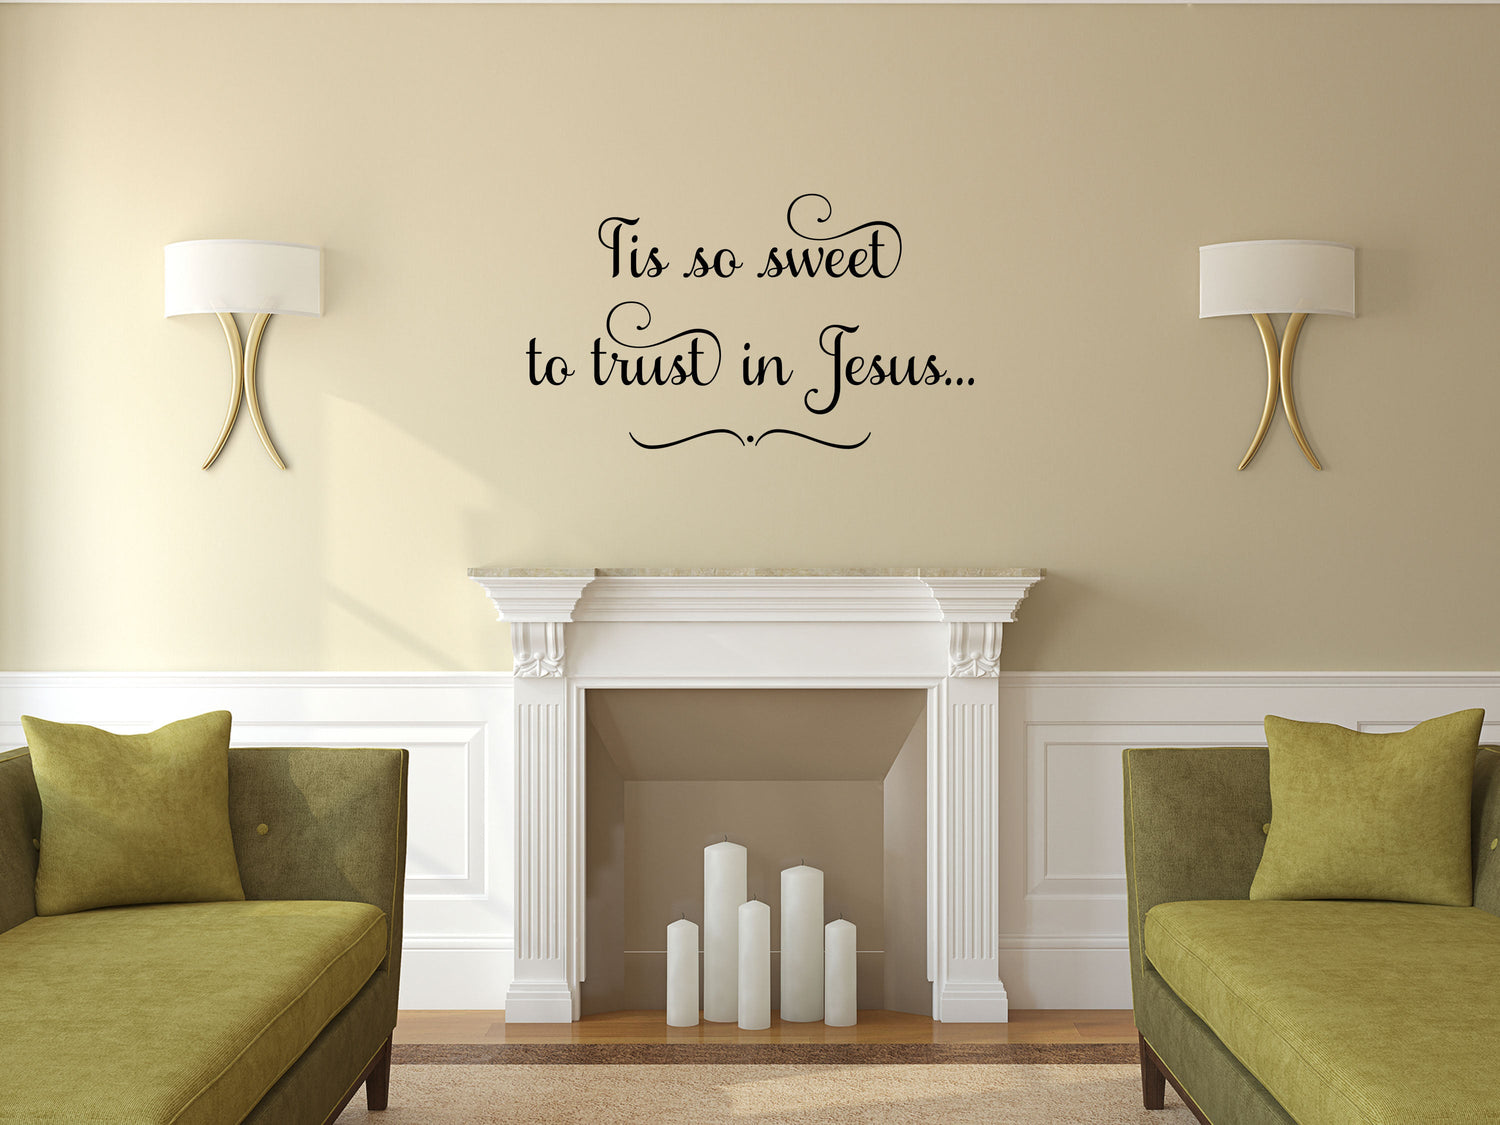 Tis So Sweet To Trust In Jesus - Inspirational Wall Signs Vinyl Wall Decal Inspirational Wall Signs 